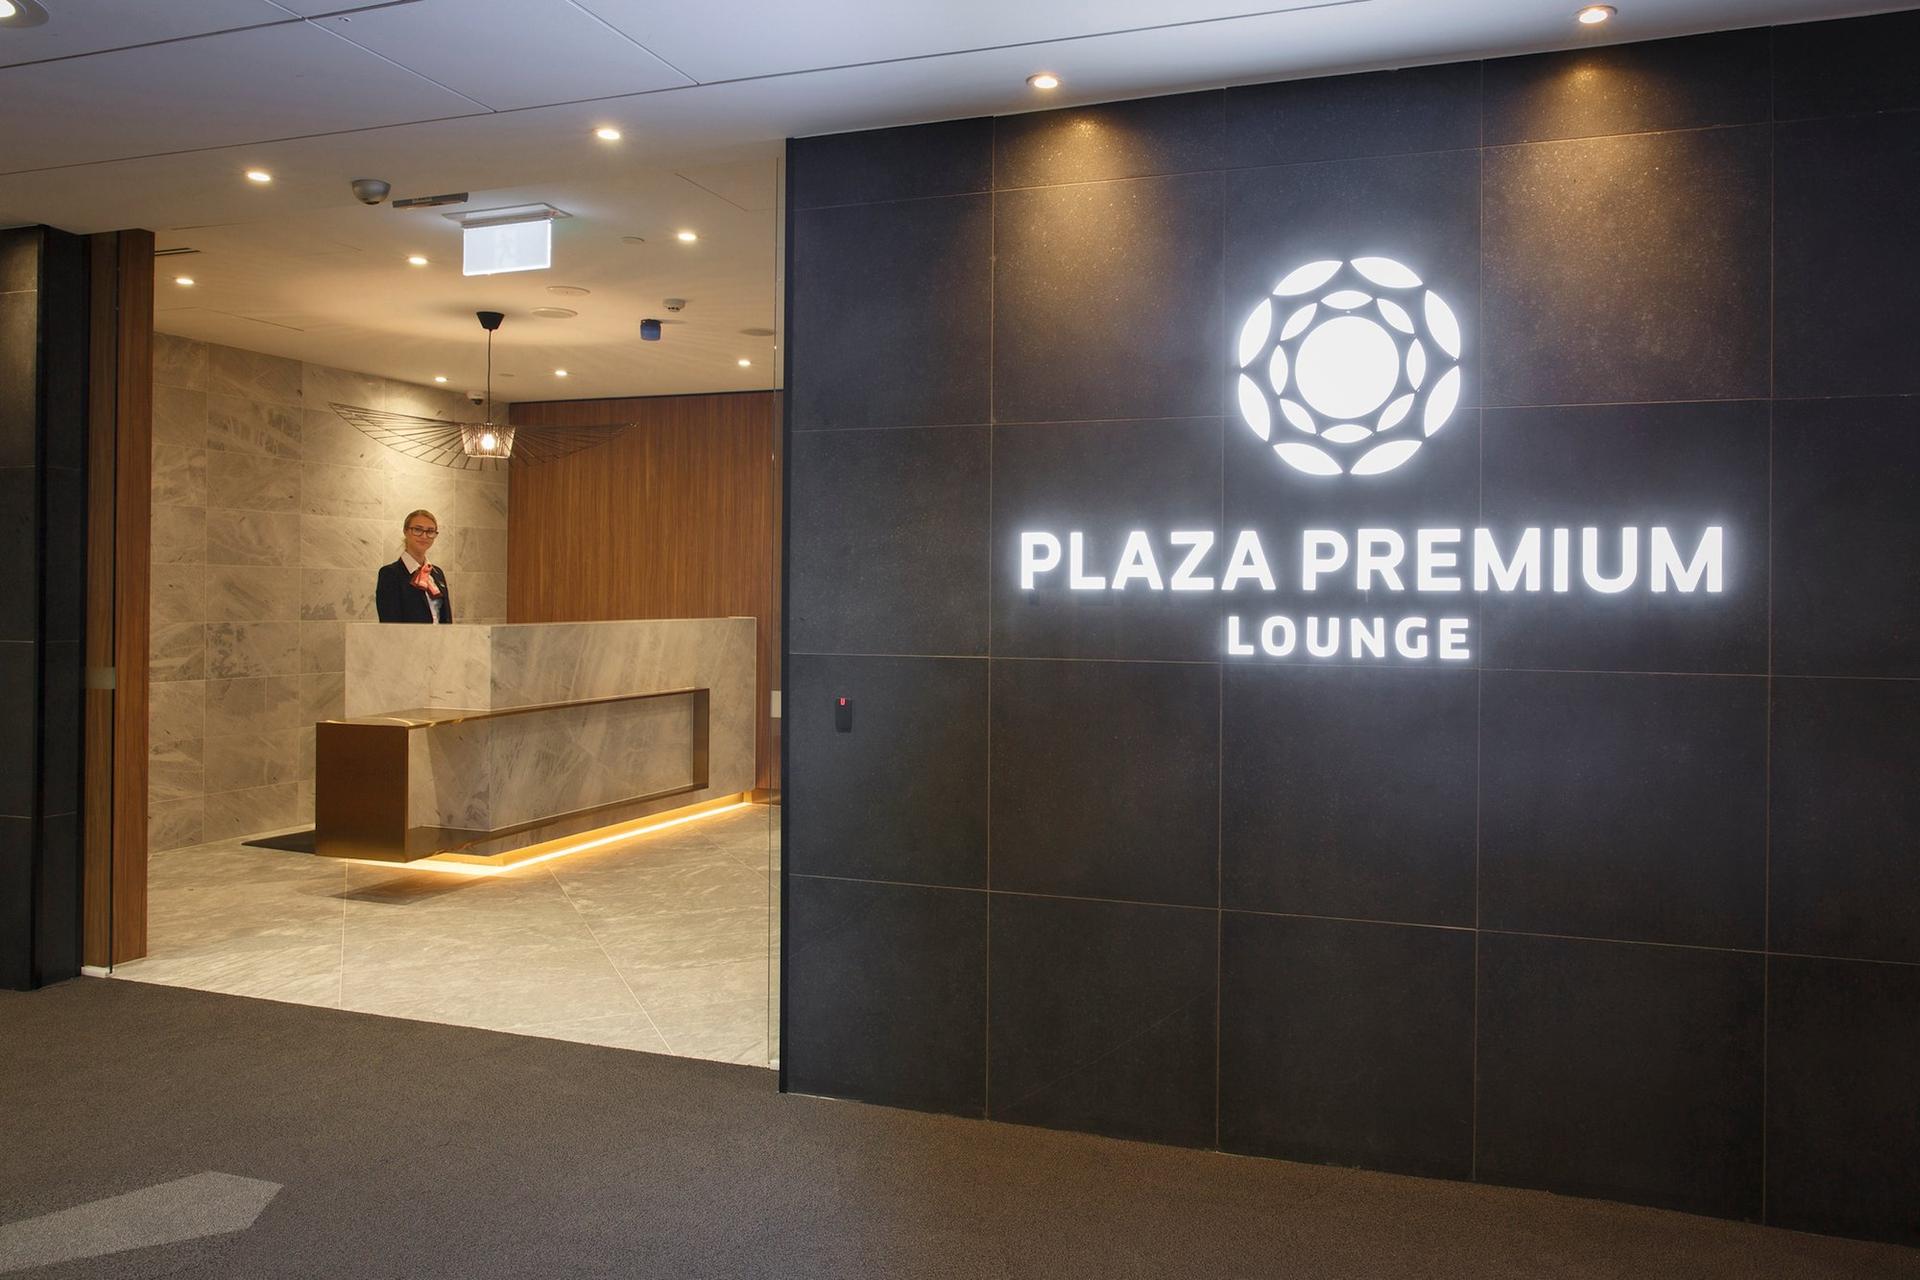 Plaza Premium Lounge image 24 of 33